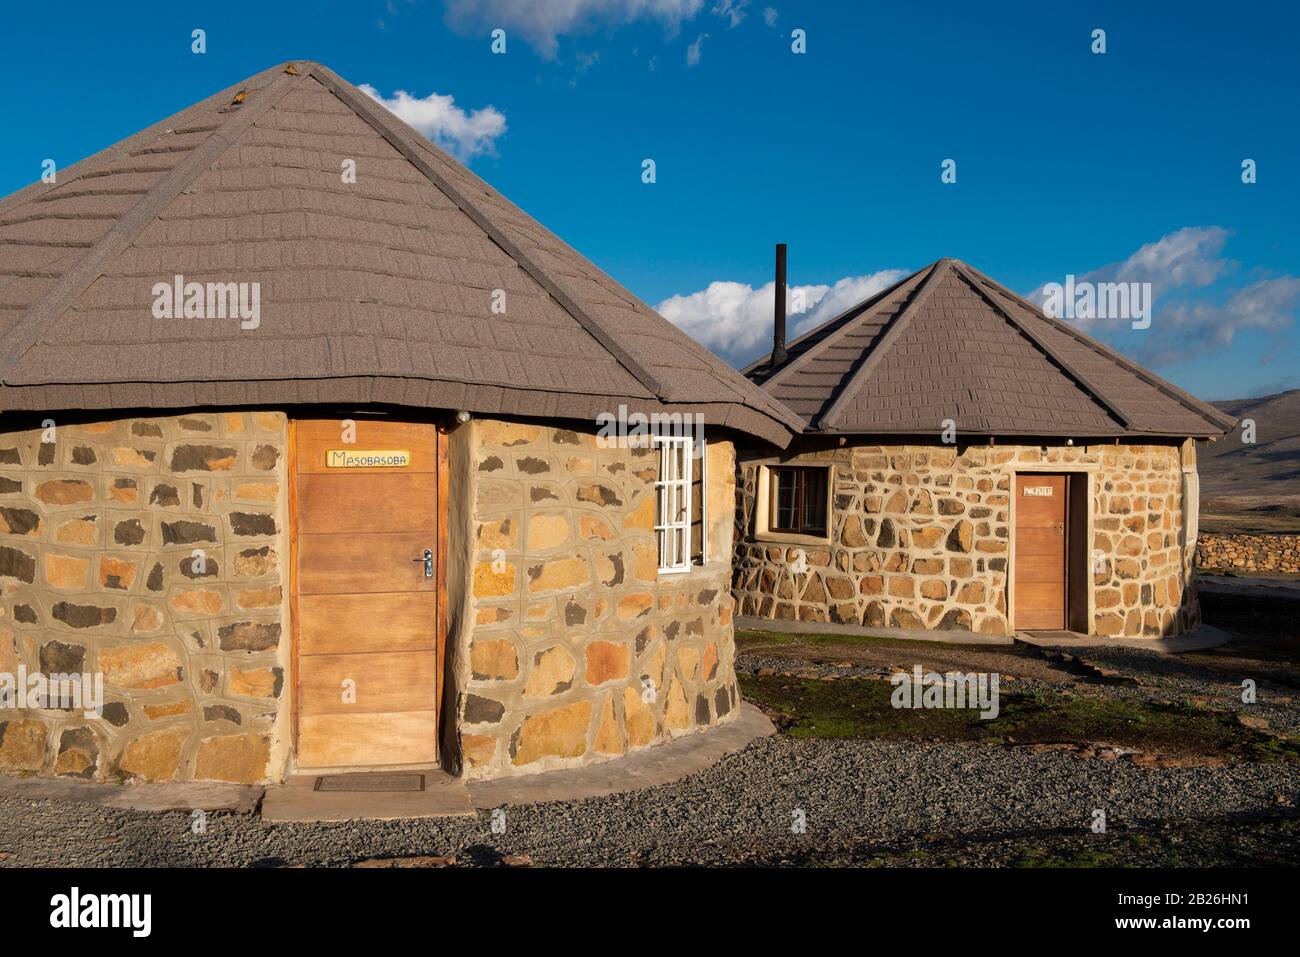 Rondavels at Sani Mountain Lodge, Lesotho Stock Photo